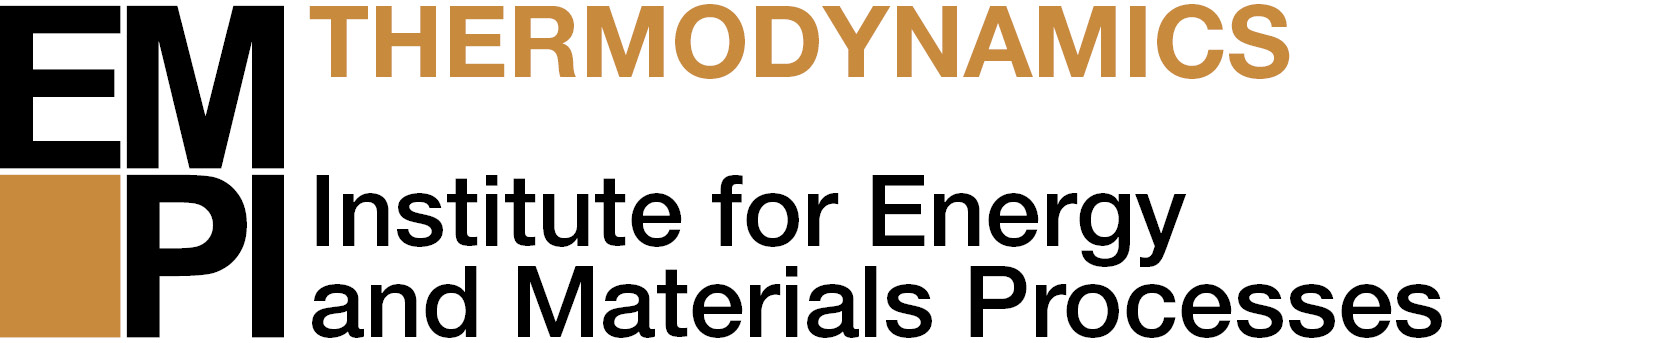 Logo EMPI Thermodynamics